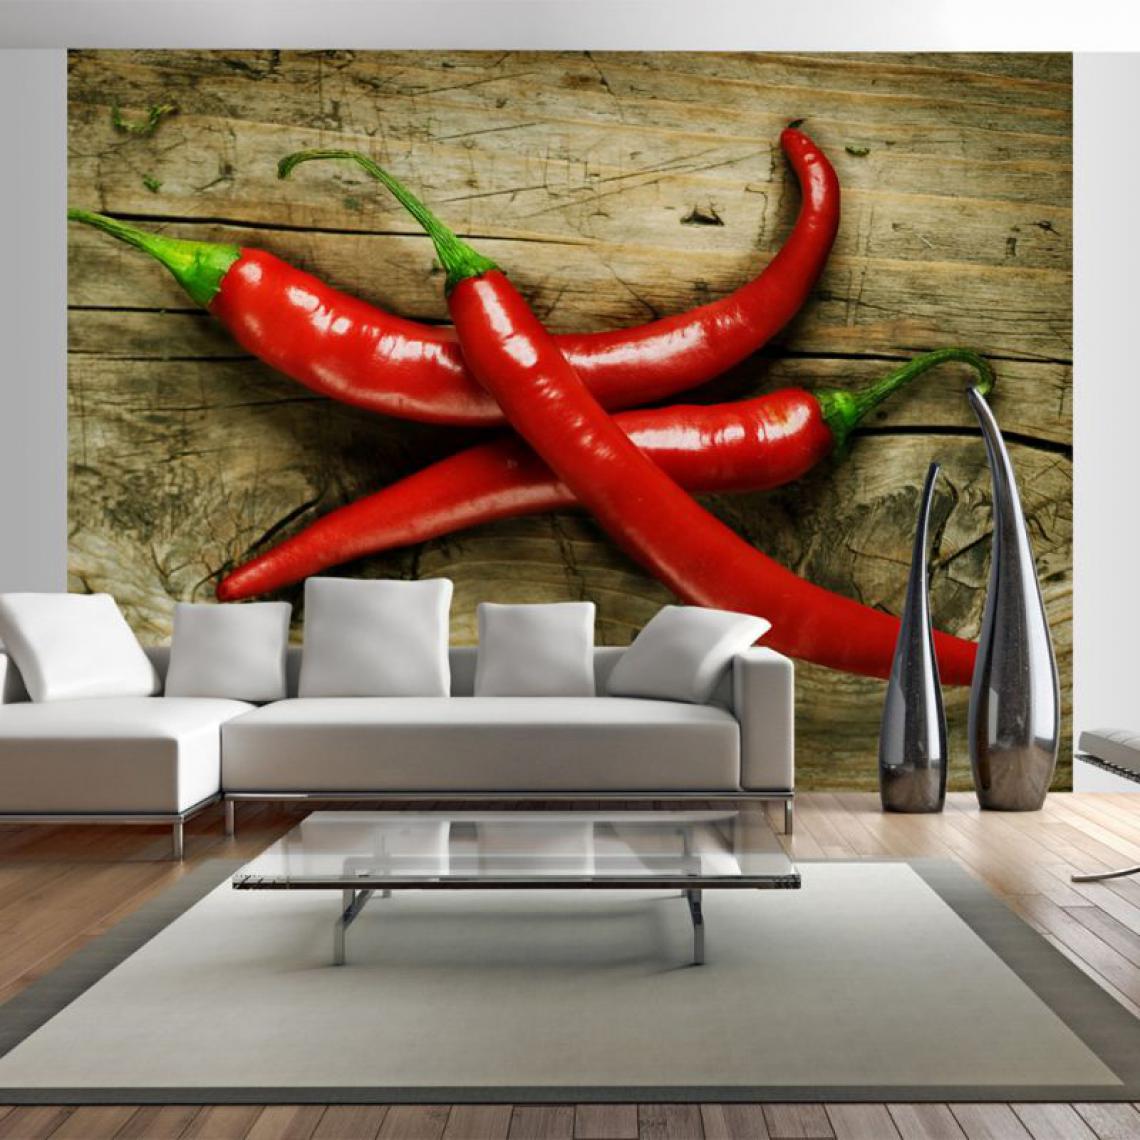 Artgeist - Papier peint - Spicy chili peppers .Taille : 300x231 - Papier peint